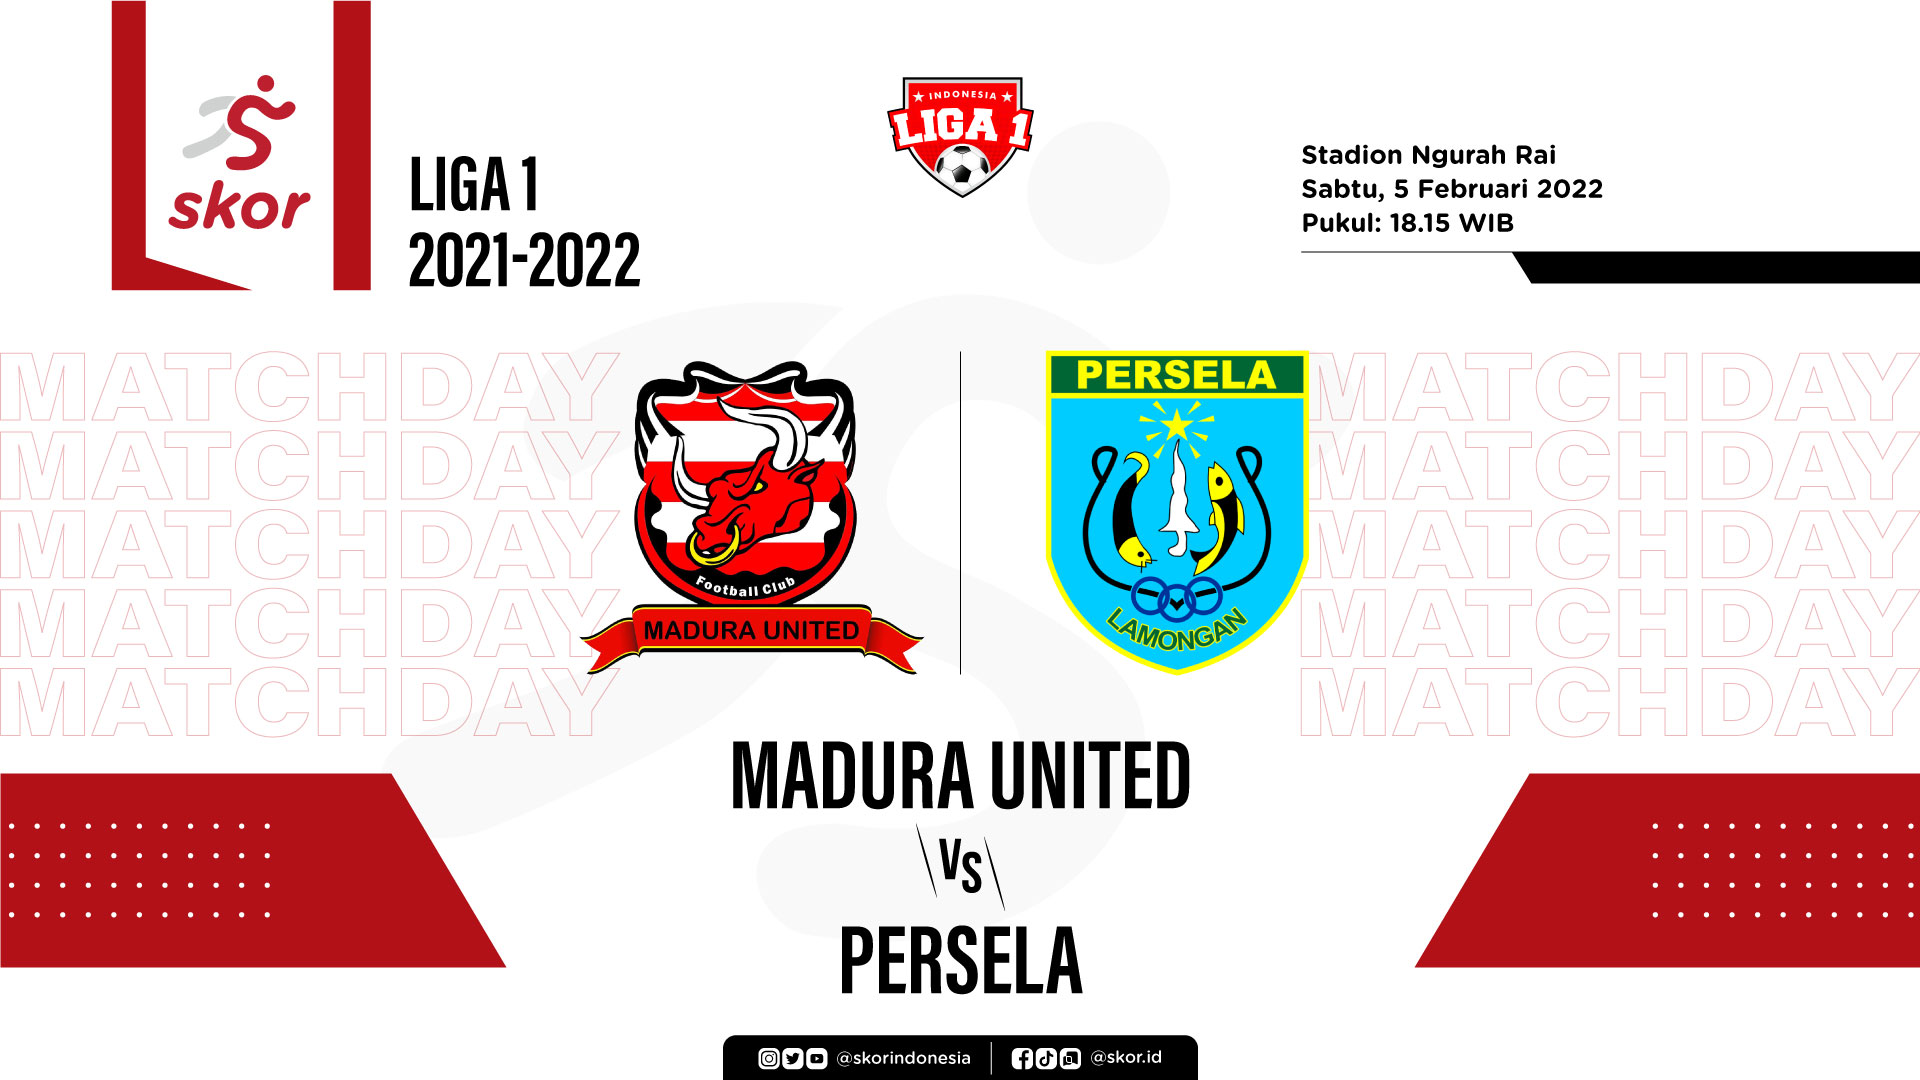 Hasil Madura United vs Persela: Renan Silva Gagalkan Kemenangan Laskar Joko Tingkir